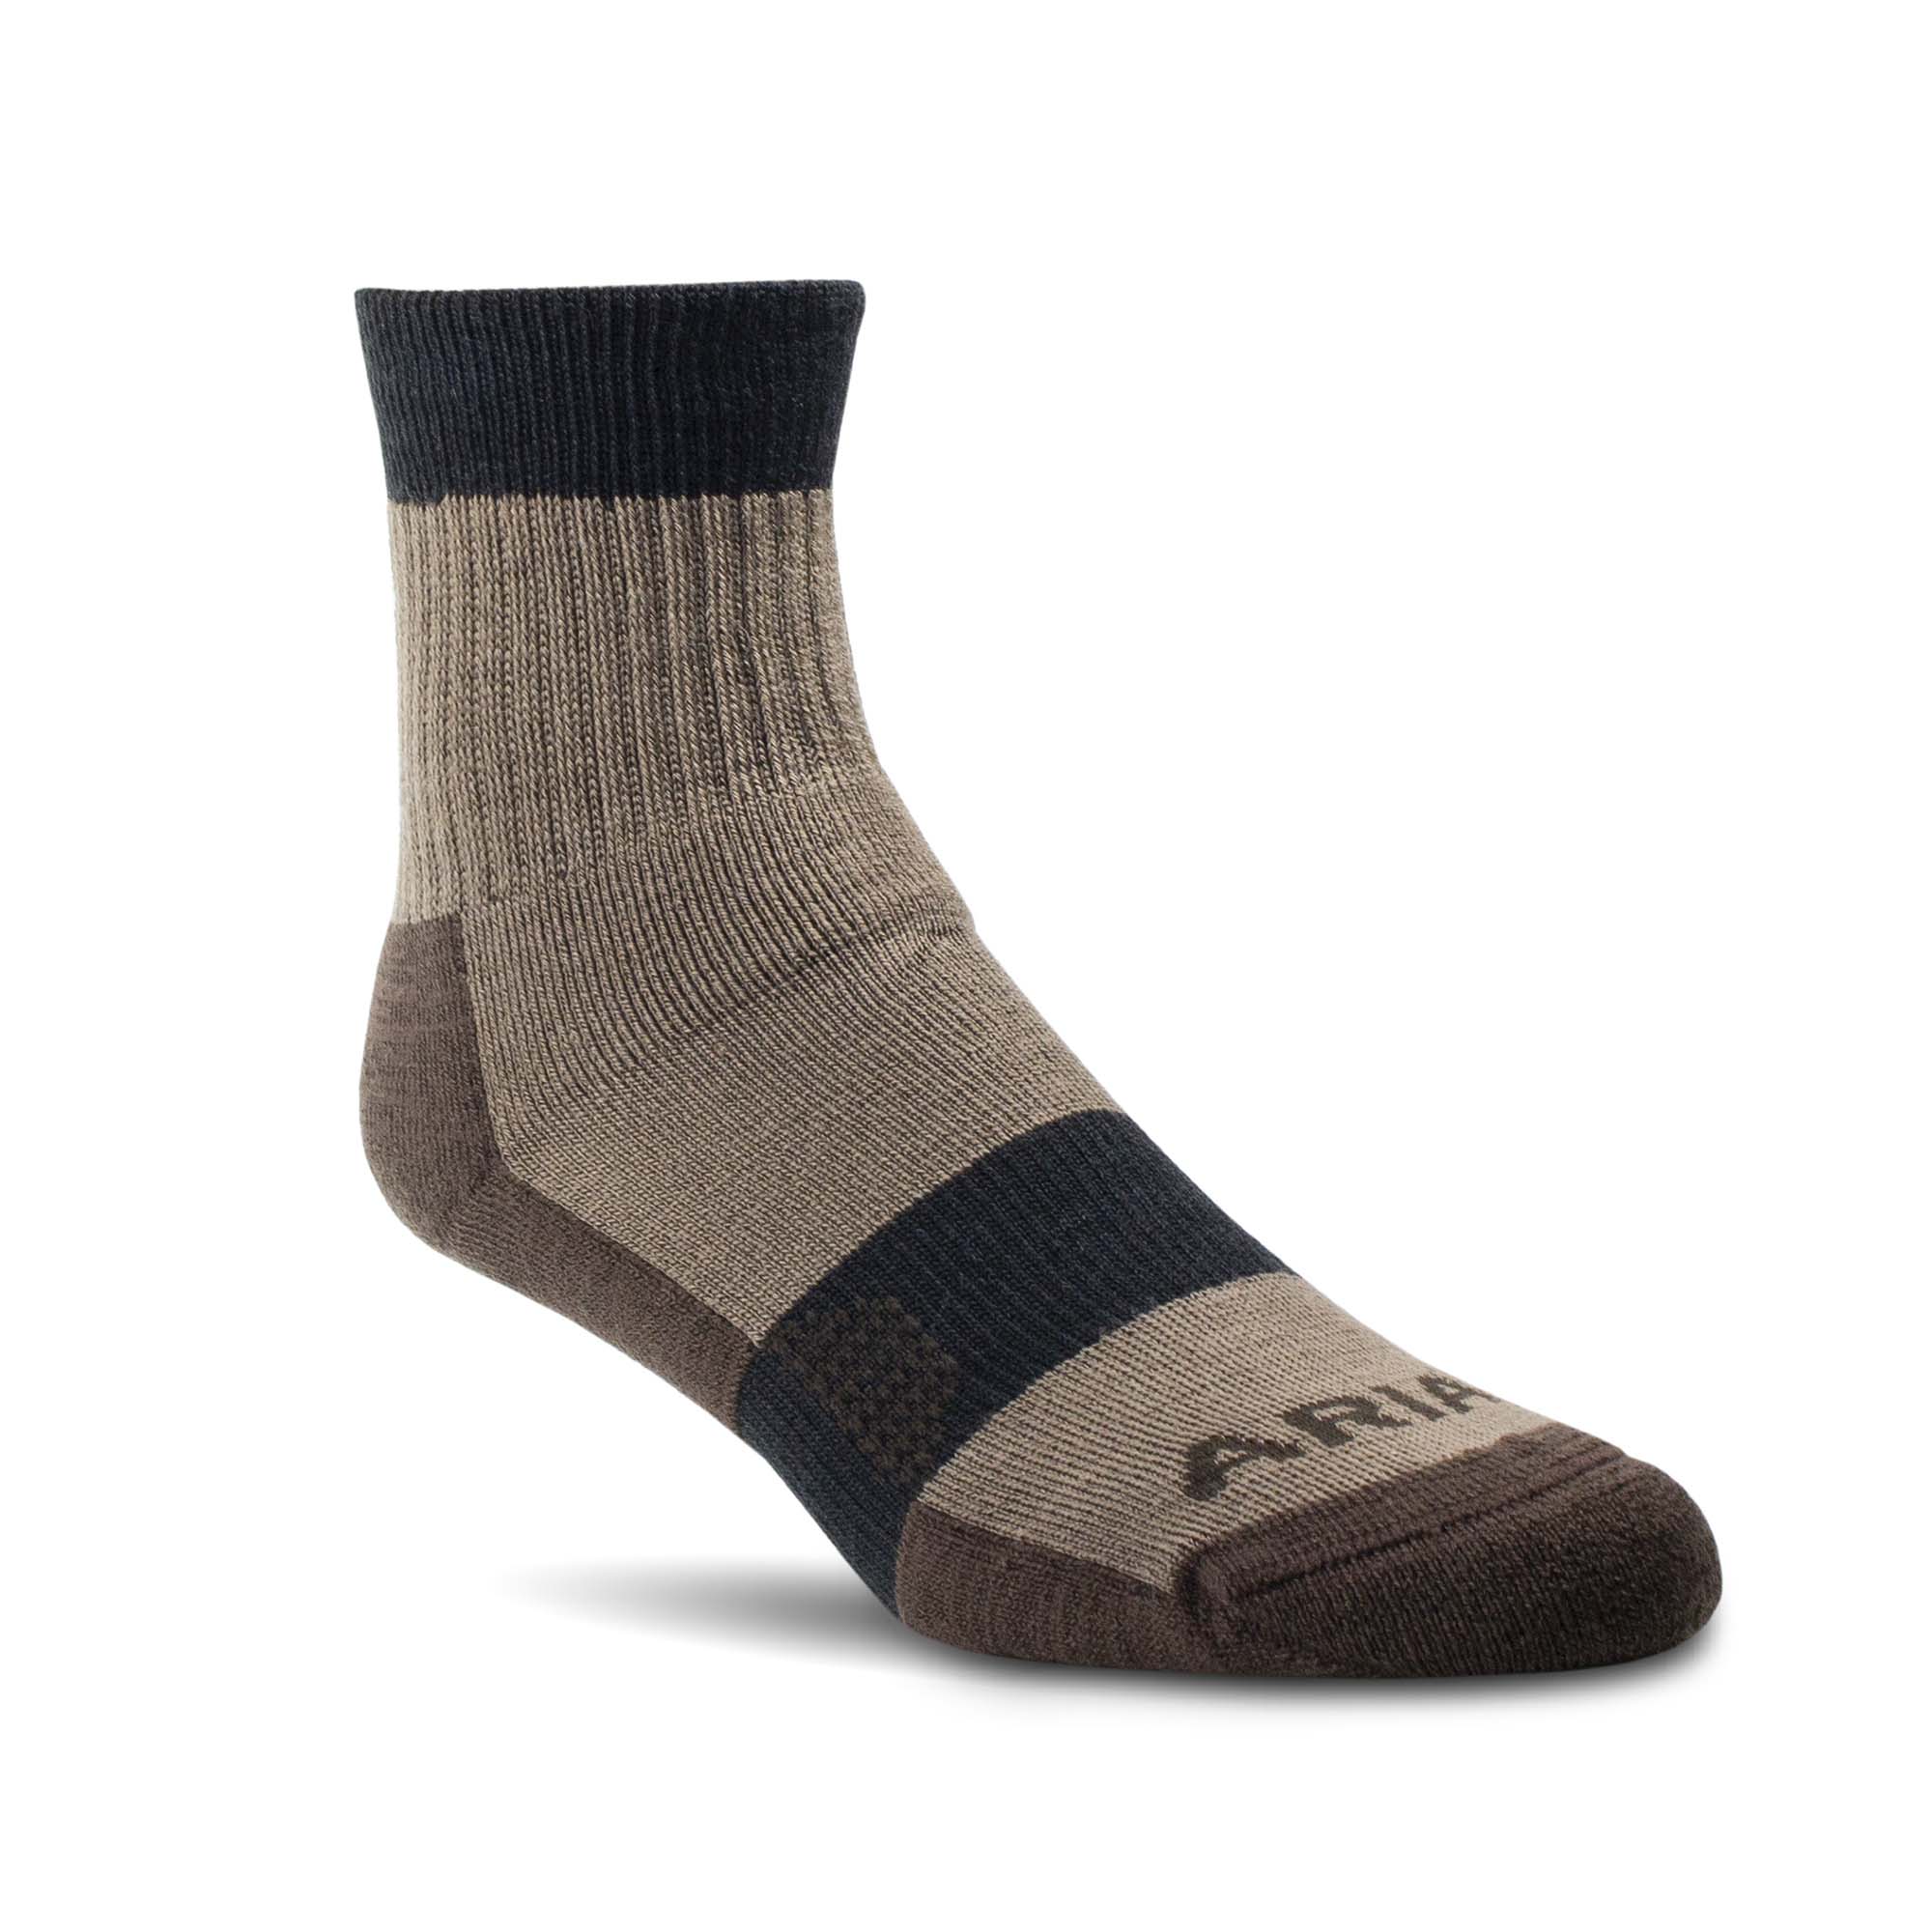 FUN TOES Men Merino Wool Hiking Socks -Lightweight-6 Pairs Pack